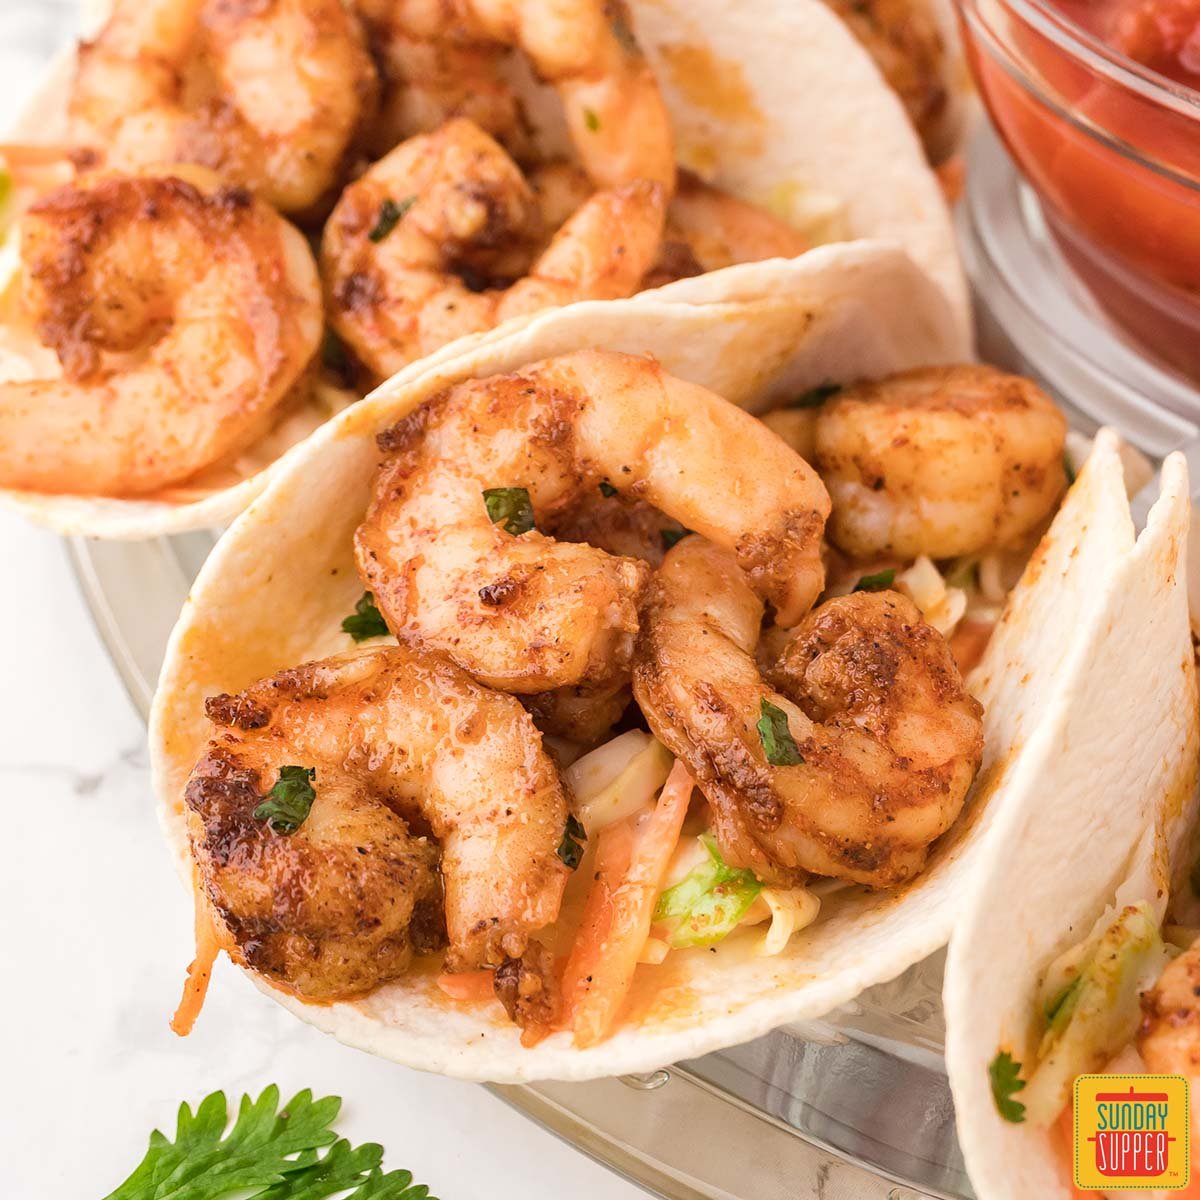 shrimp tacos up close showing air fried shrimp and slaw in tortilla shells